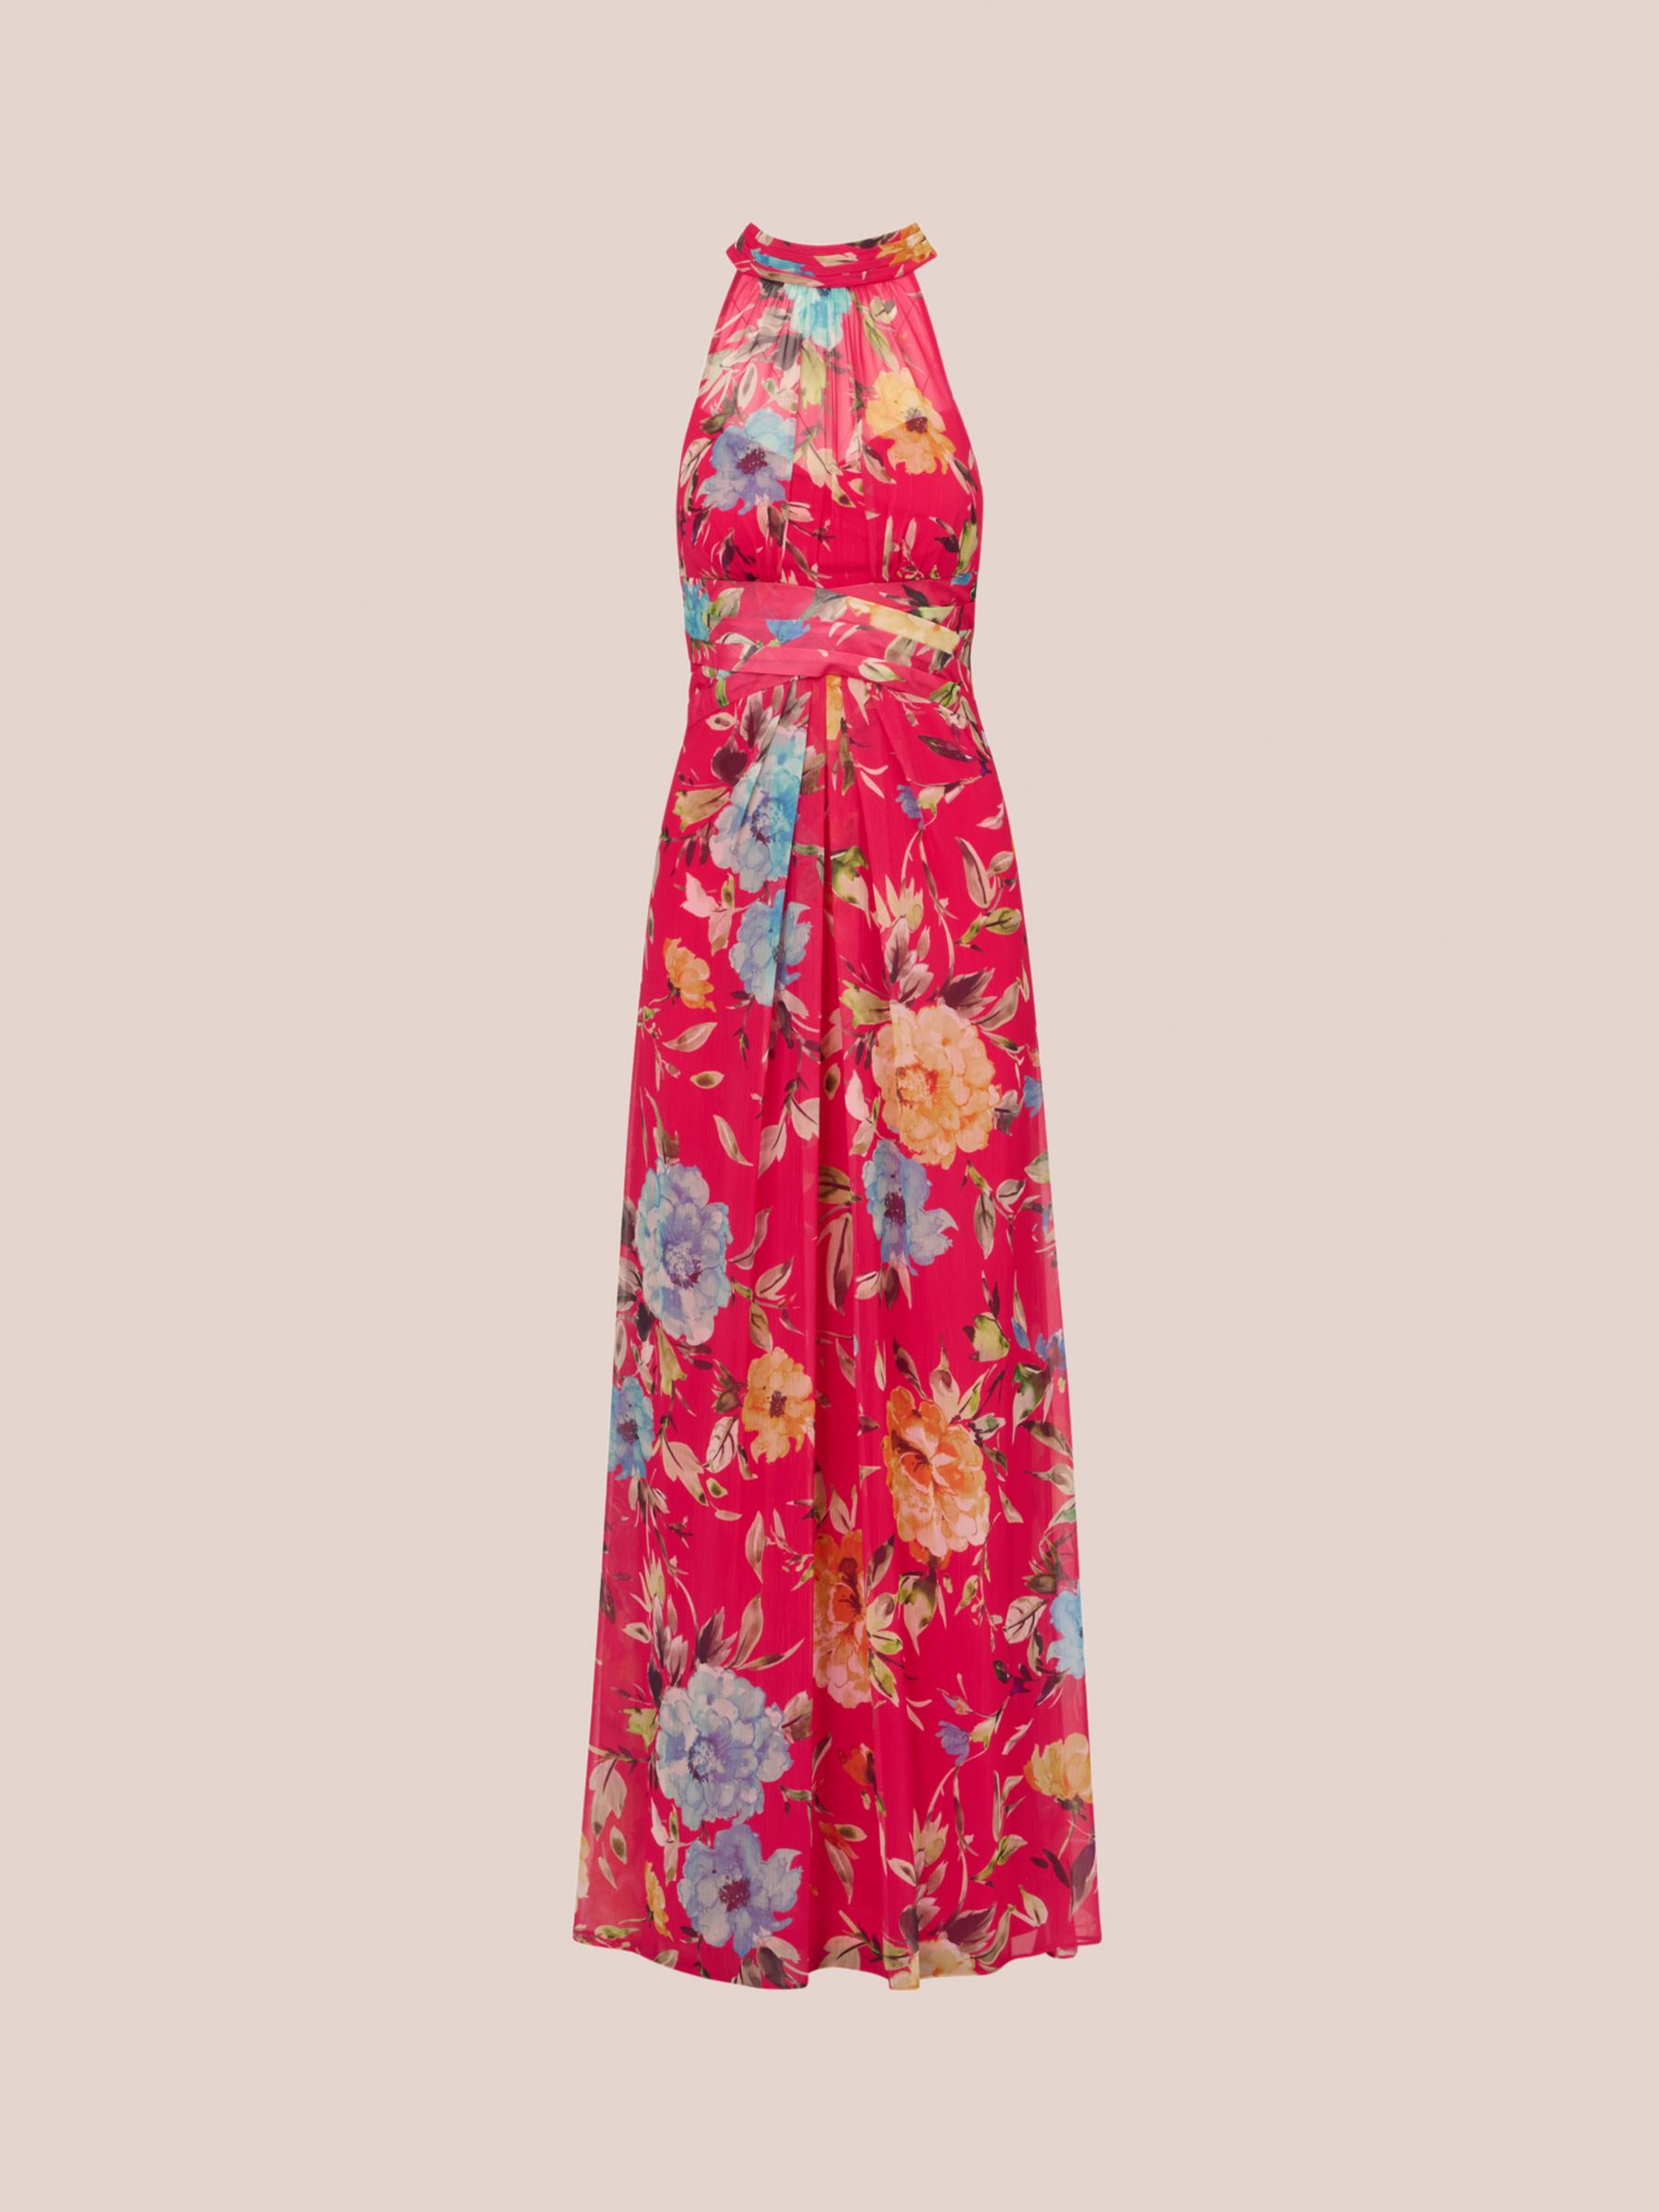 Adrianna Papell Floral Chiffon Halterneck Dress, Pink/Multi, 8